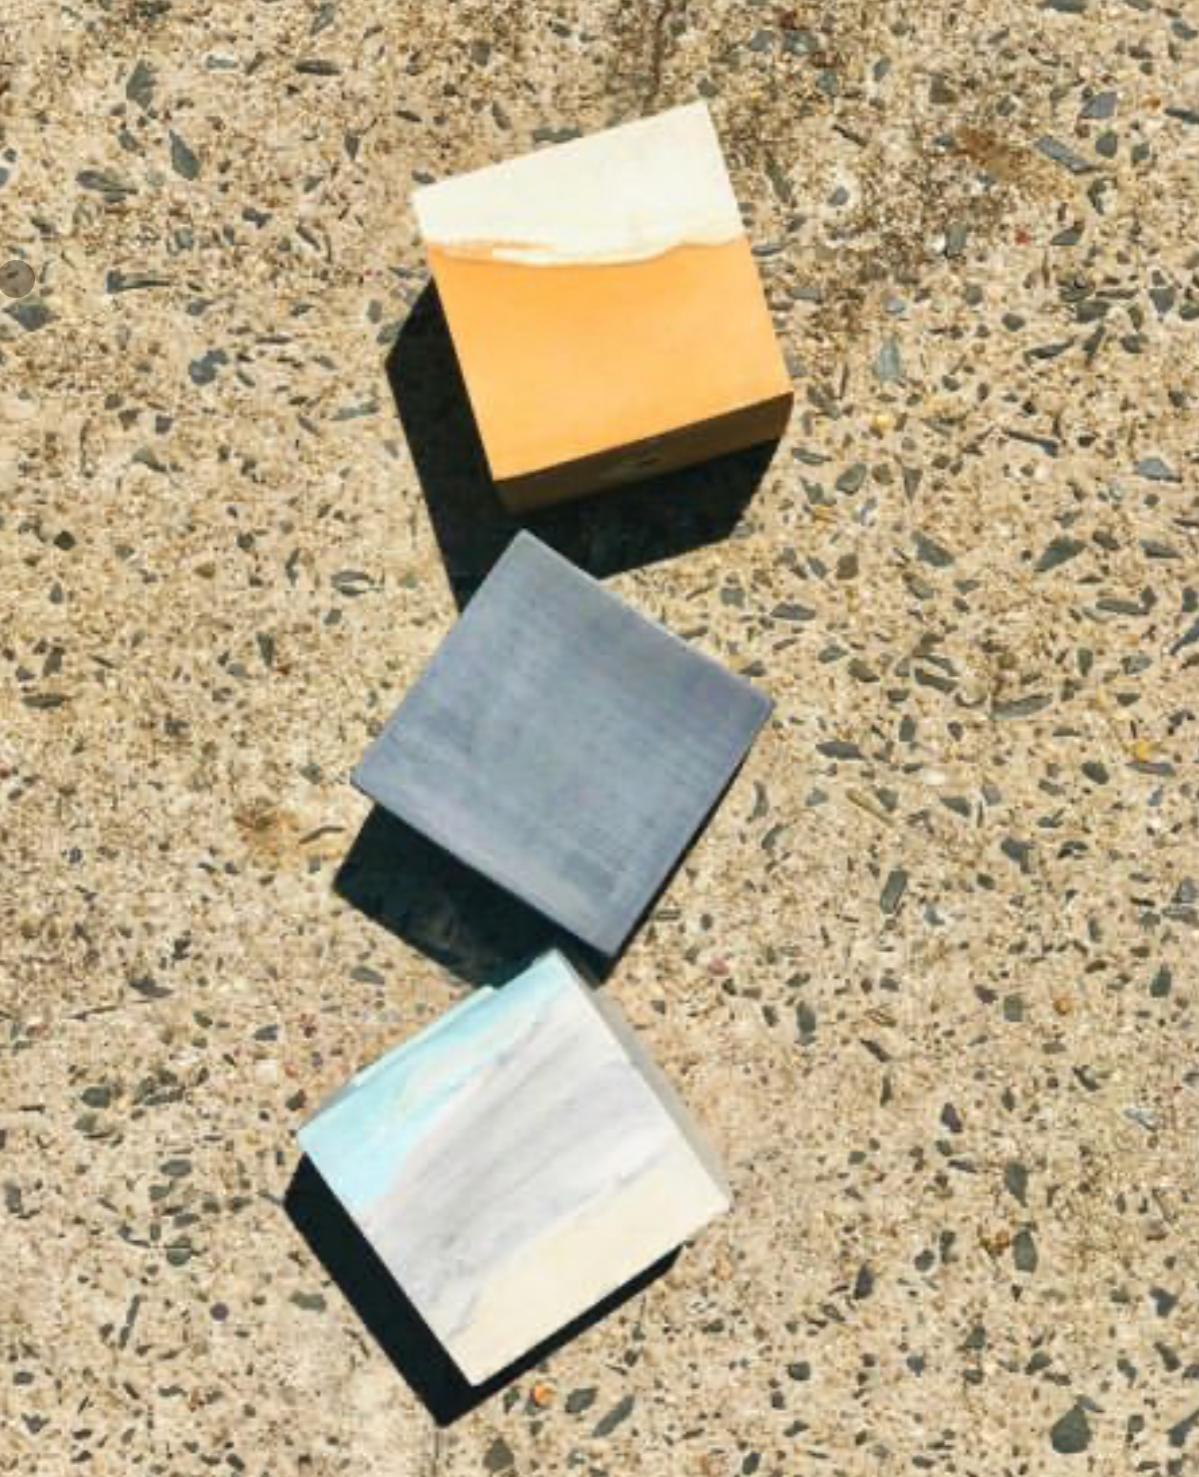 Three 6” concrete cube planters, handmade by Queen City ‘Crete,  lie flat on a concrete background.